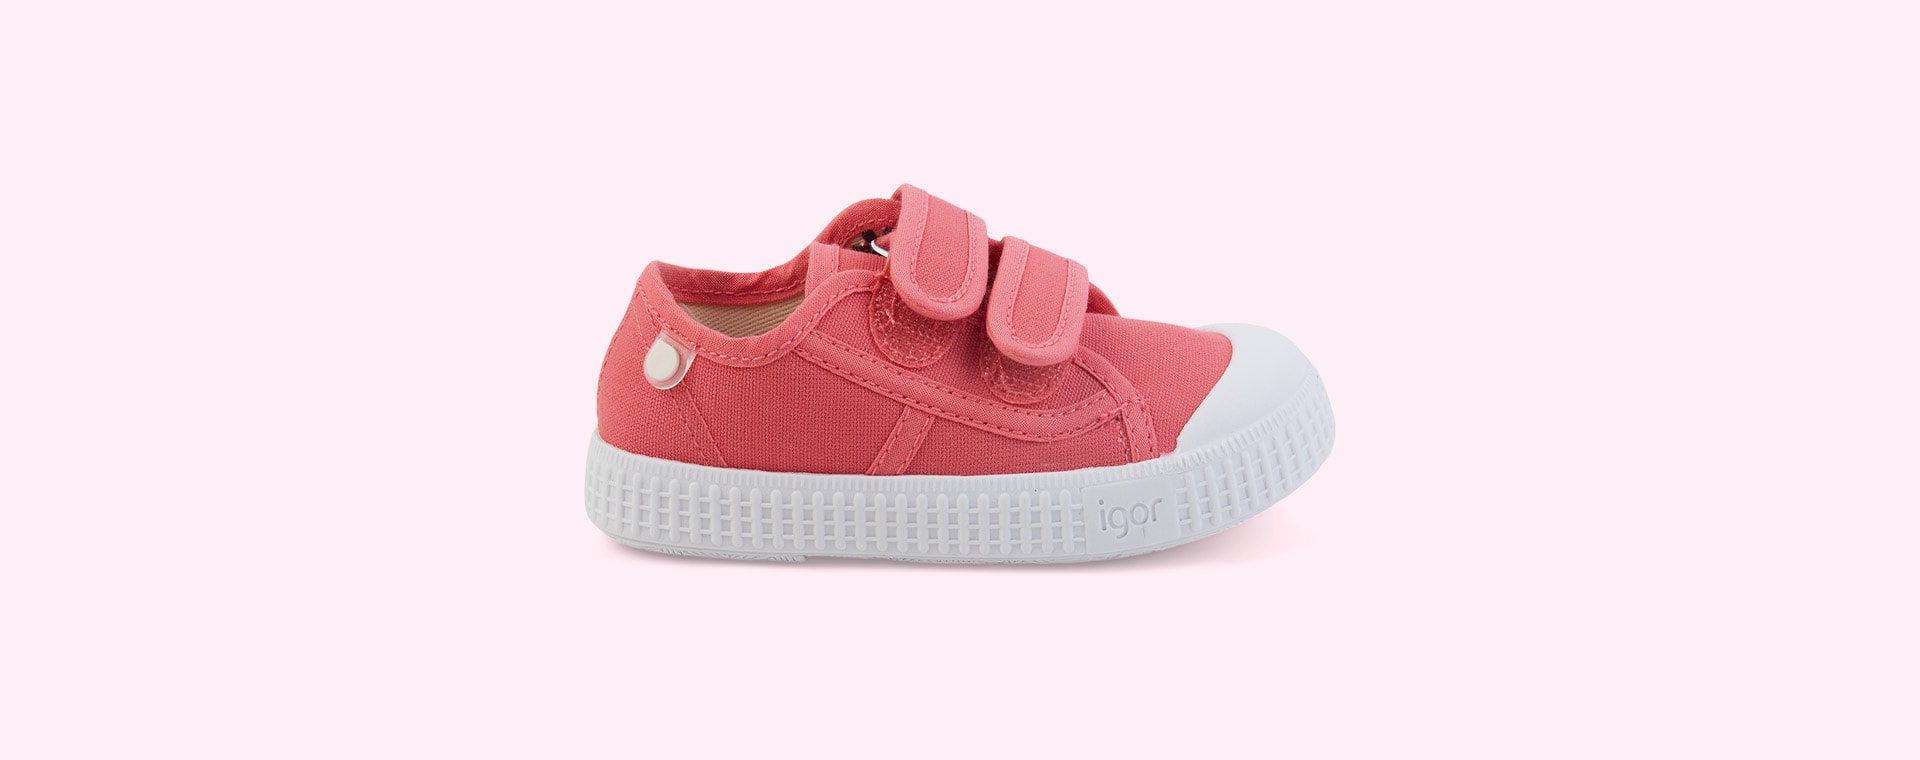 Pink igor Berri Velcro Tennis Shoe